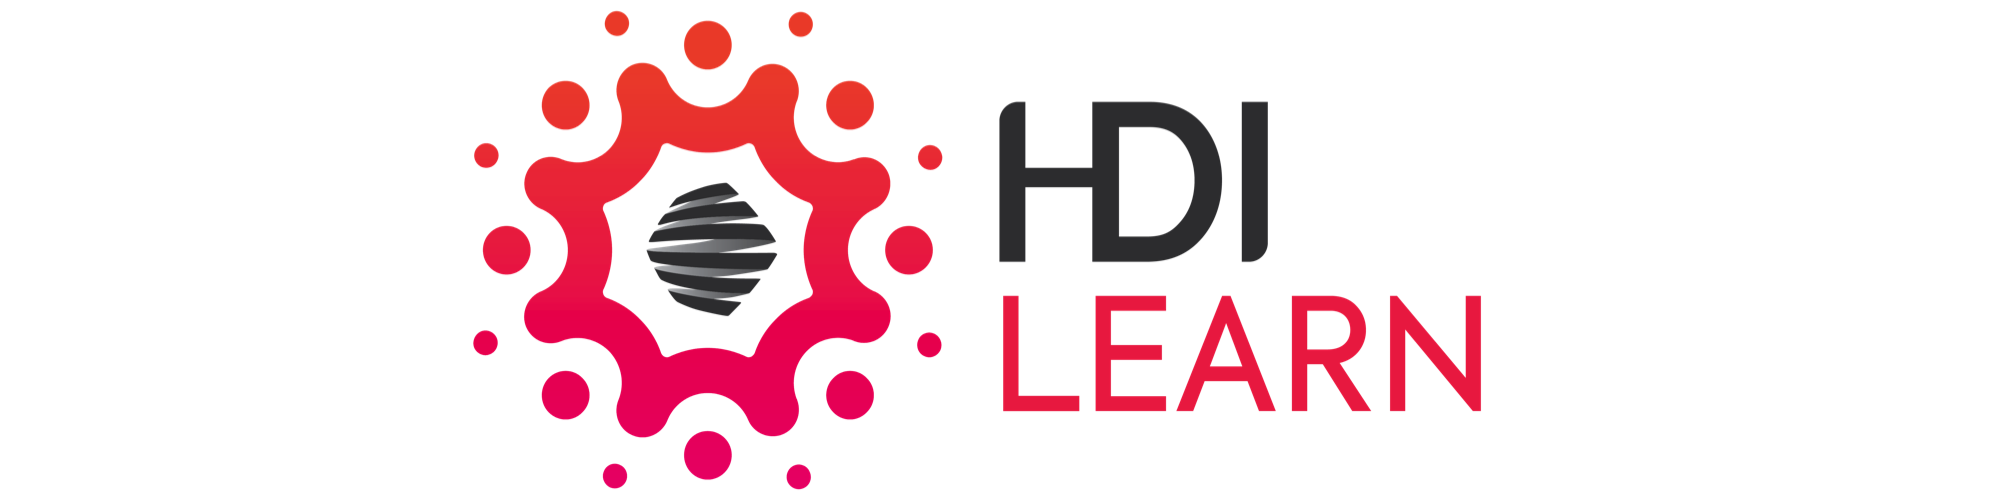 HDI learn logo2